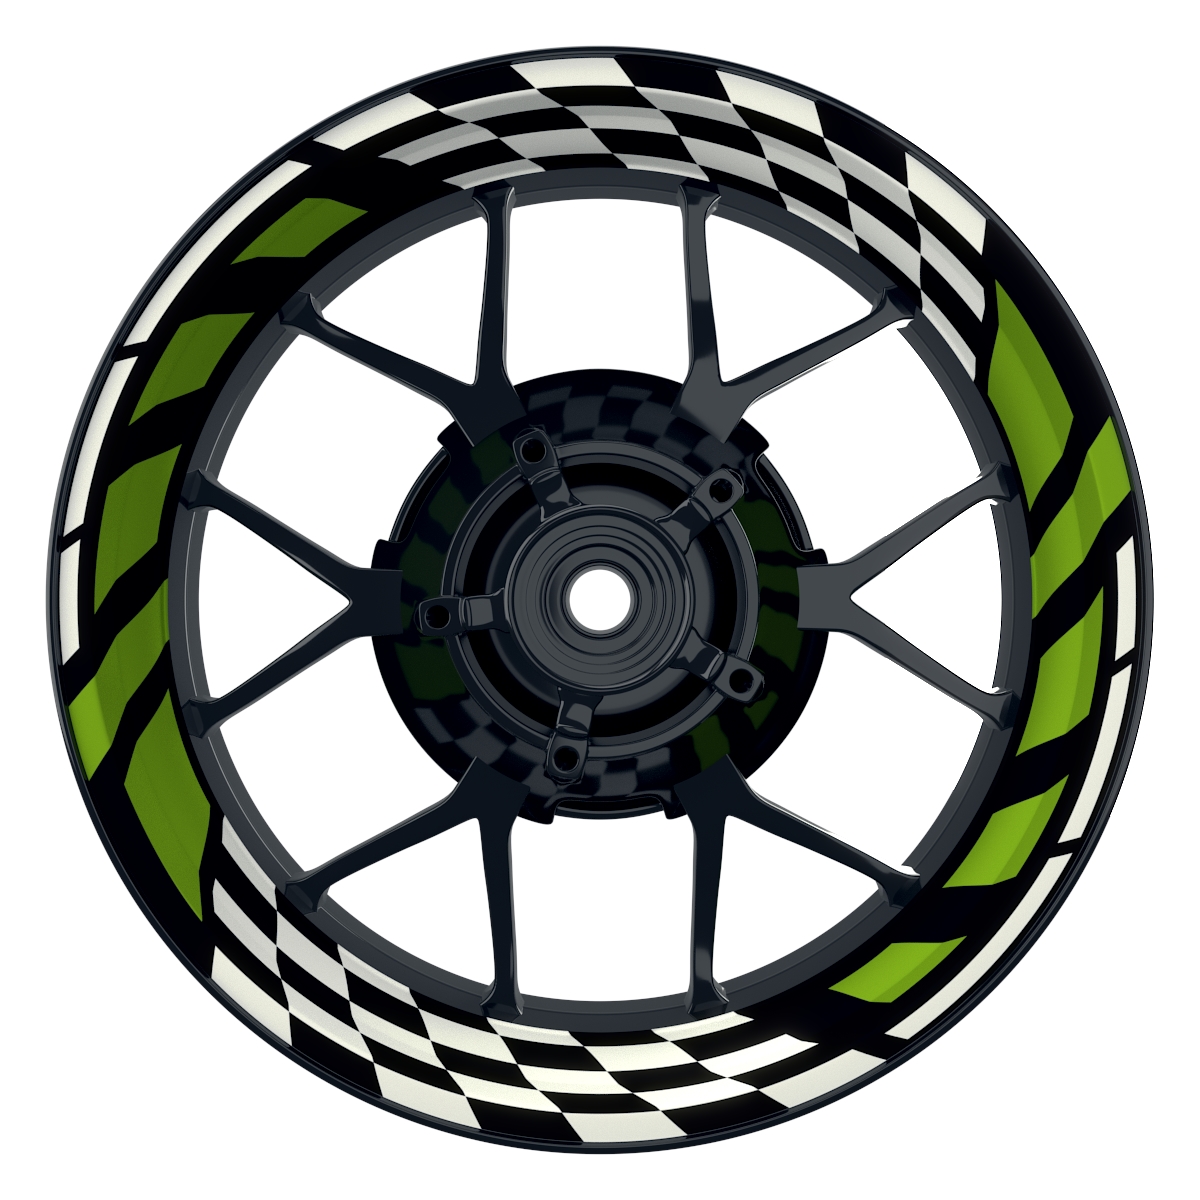 RACE schwarz gruen Wheelsticker Felgenaufkleber